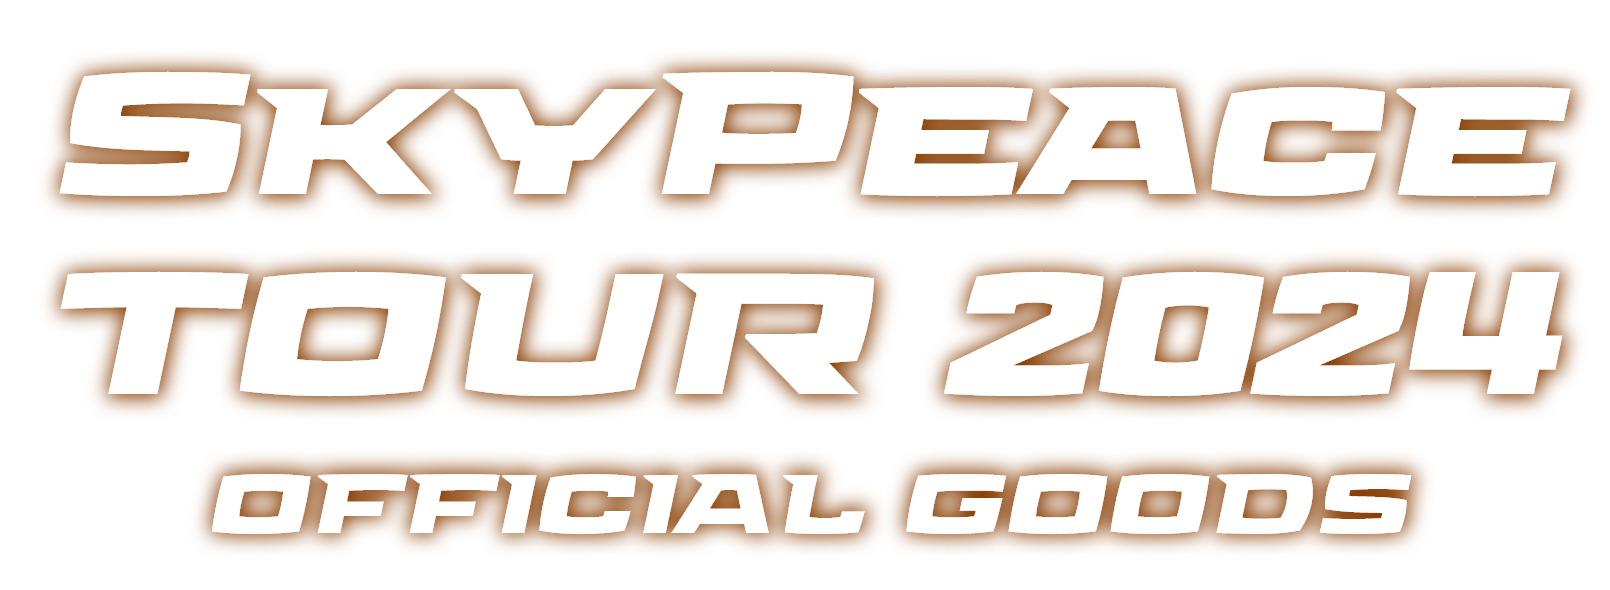 SkyPeace Tour 2024 Official Goods